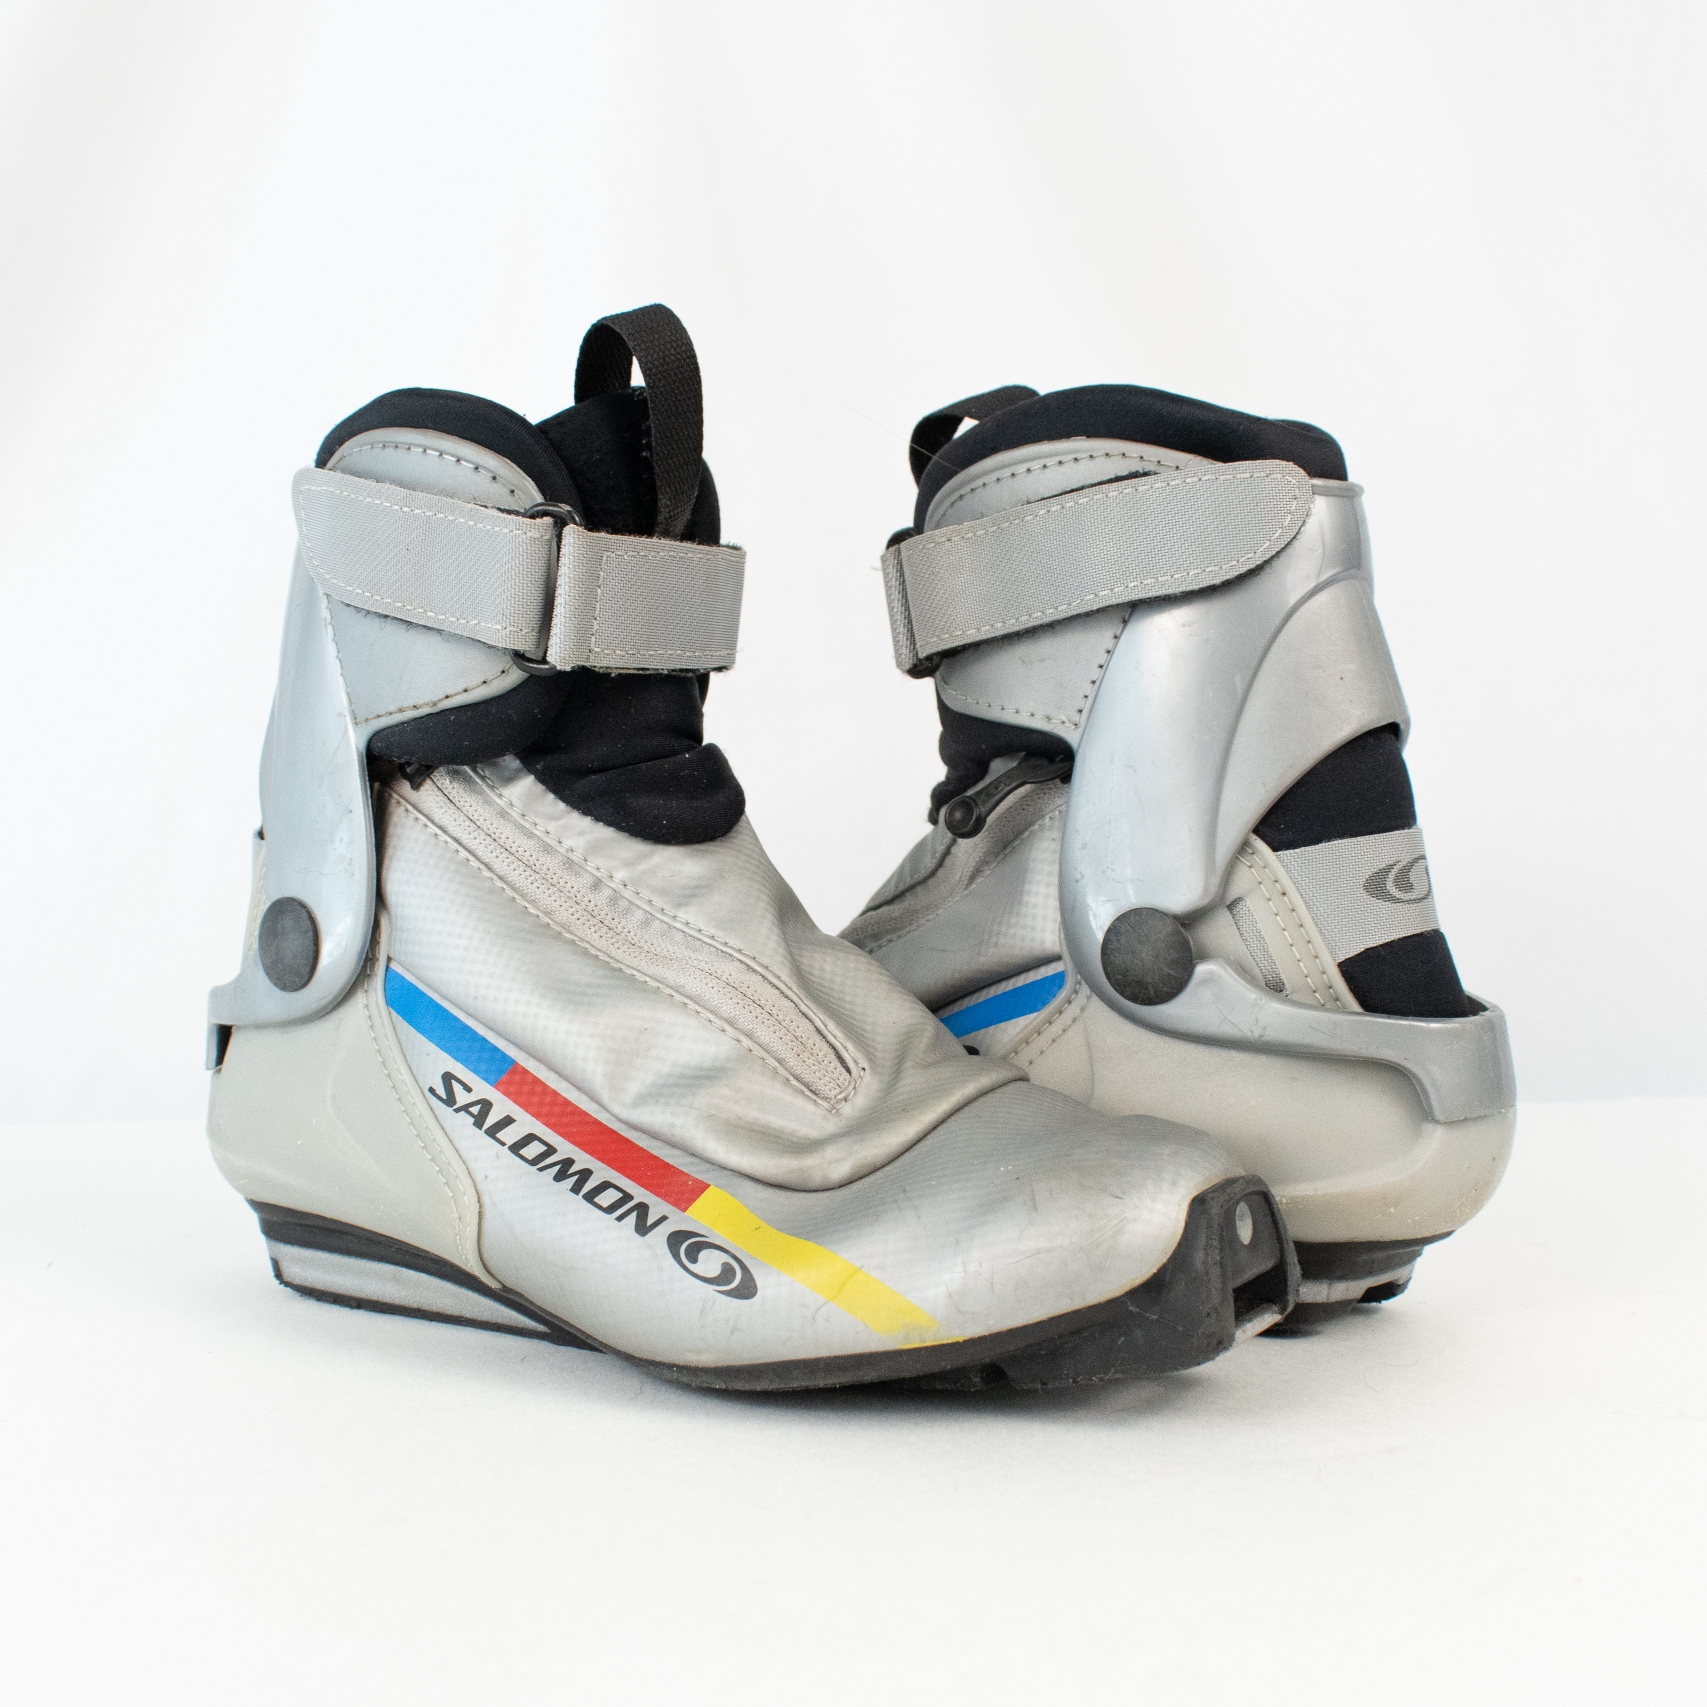 Skate Size 5.5 Used Salomon Cross Country Ski Boots